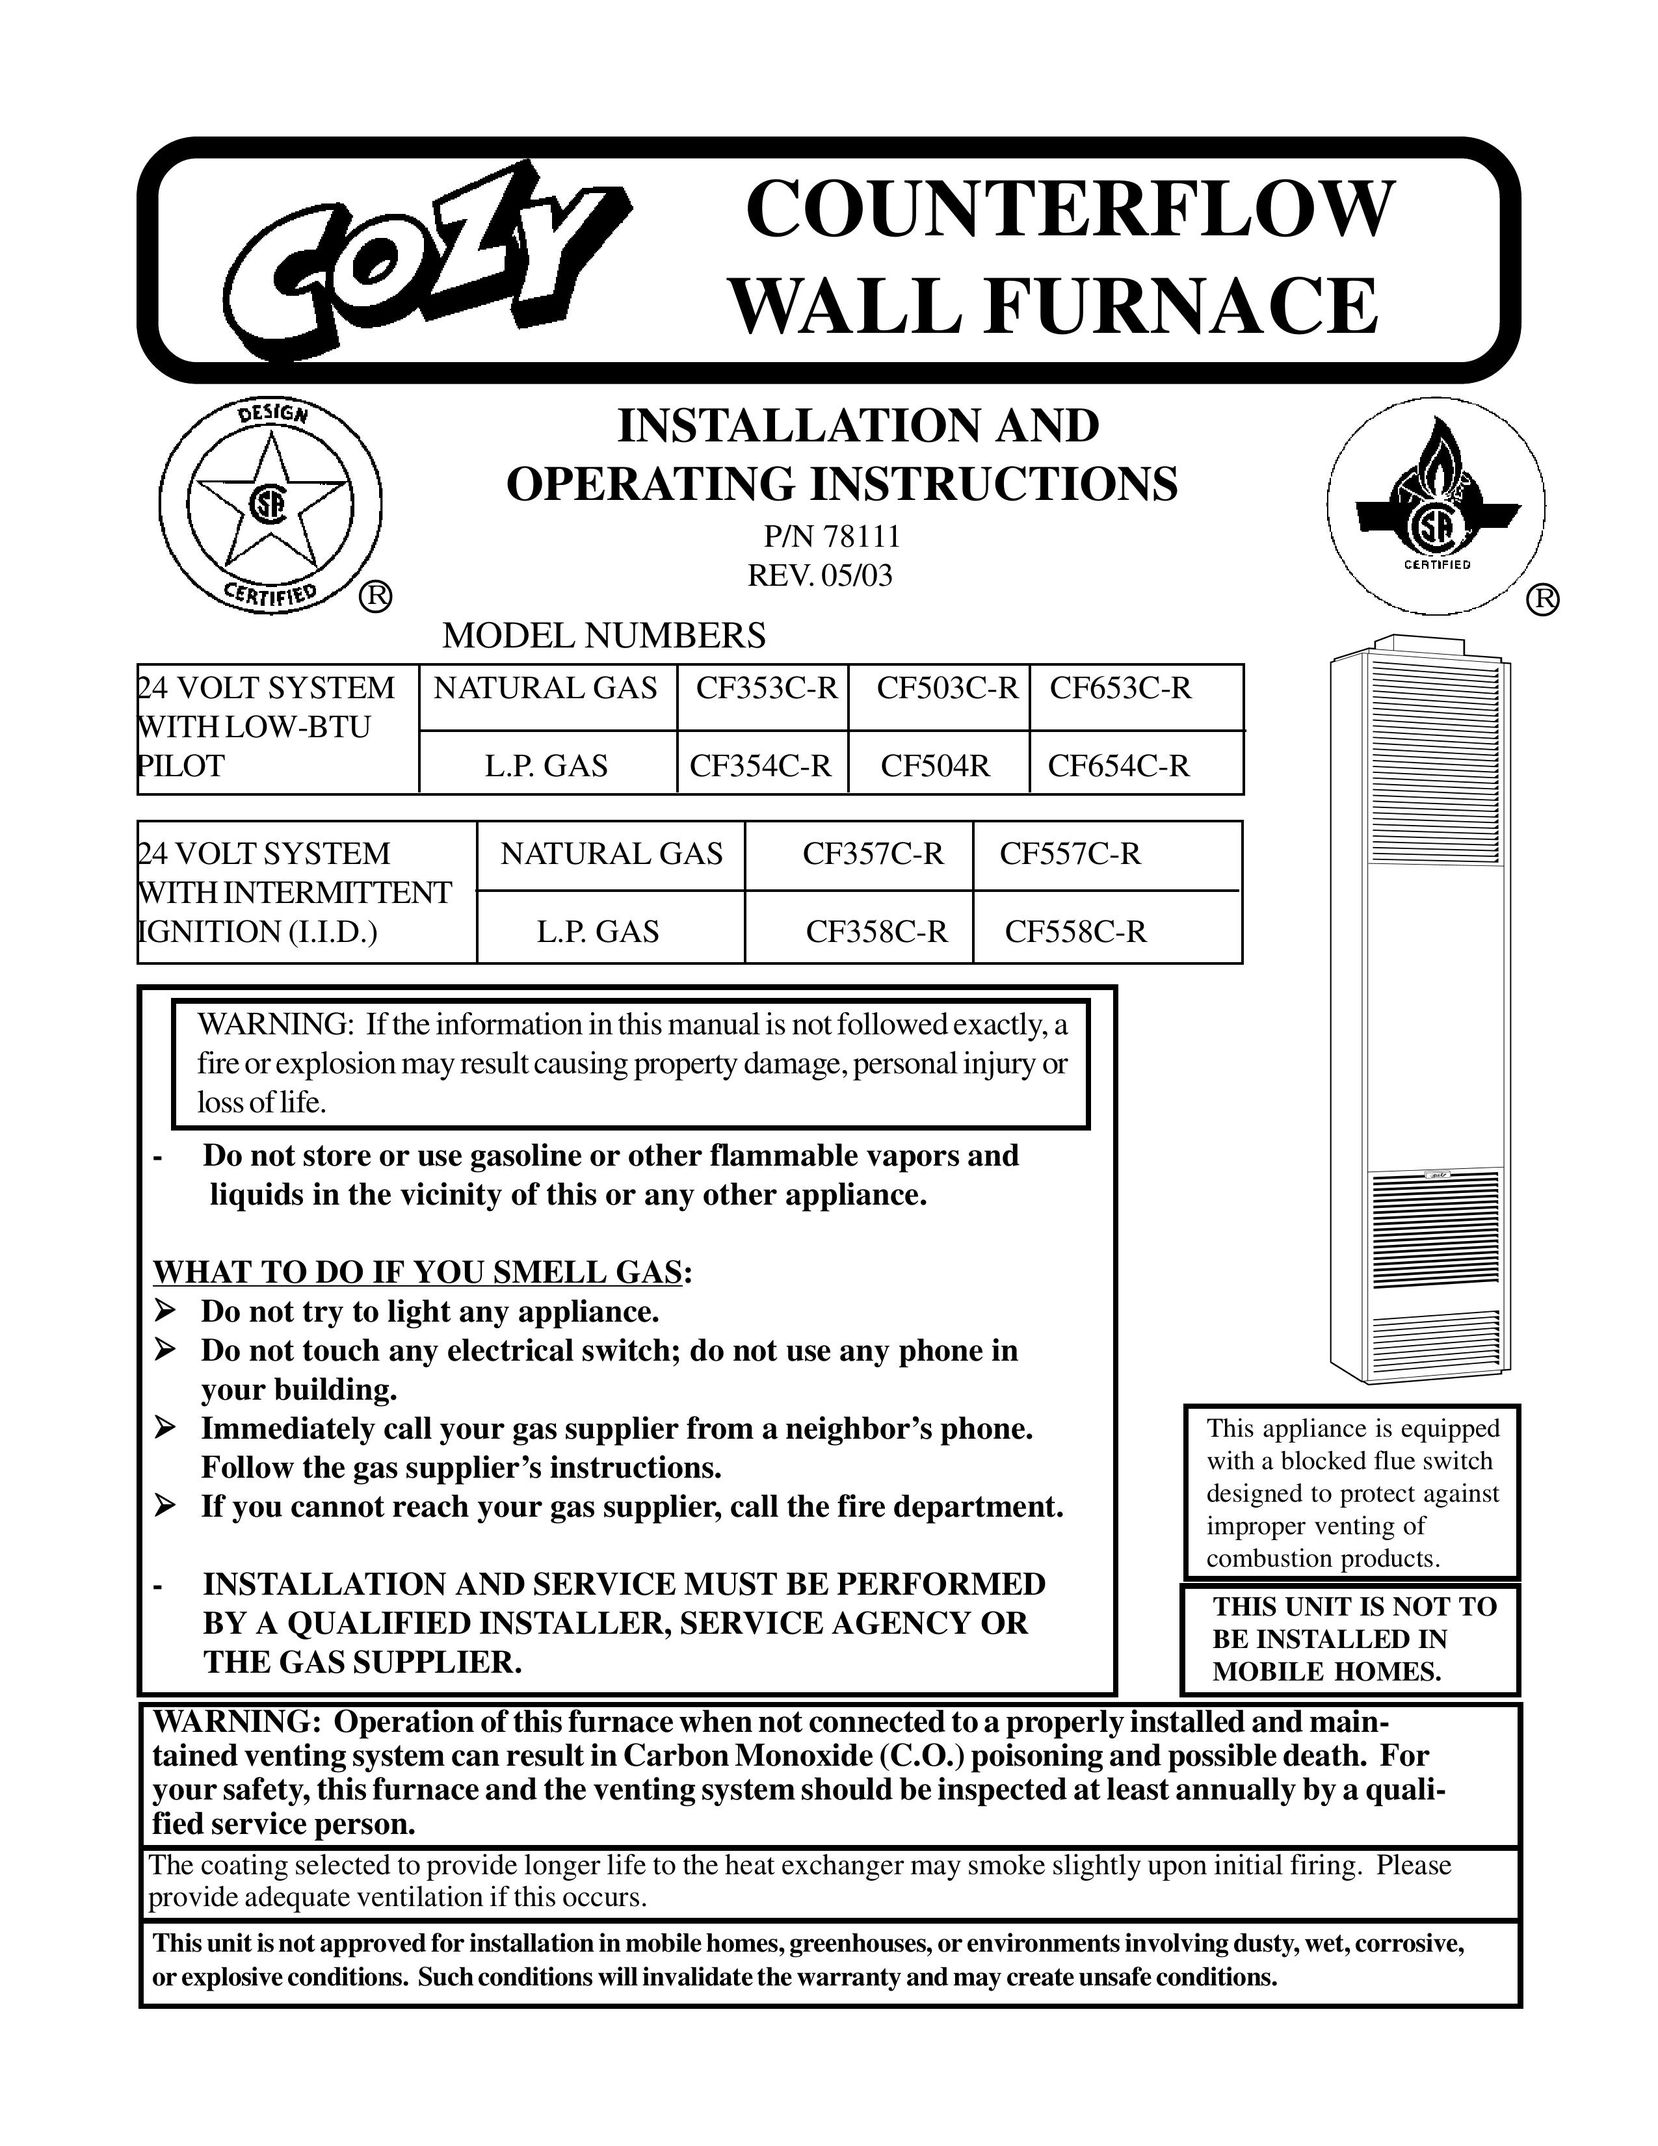 Louisville Tin and Stove CF354C-R Furnace User Manual